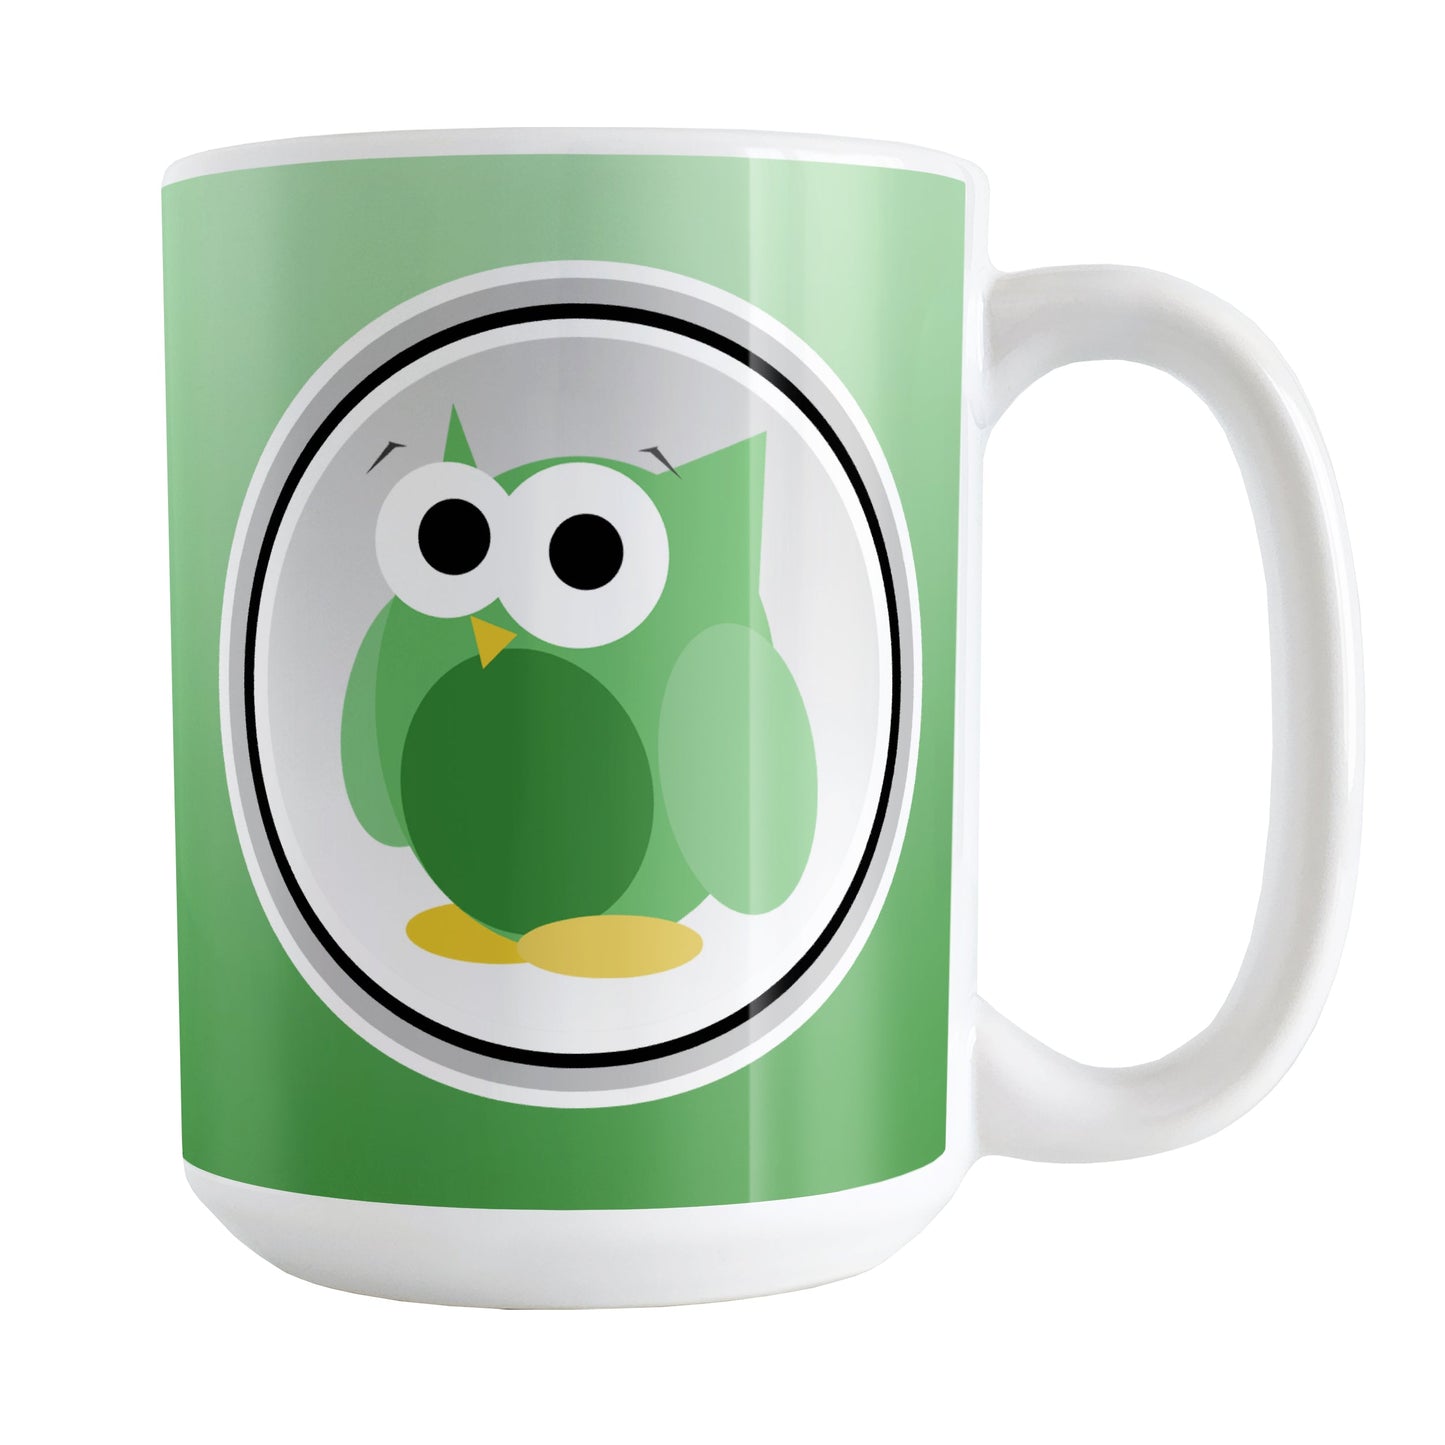 Funny Cute Green Owl Mug at Amy's Coffee Mugs